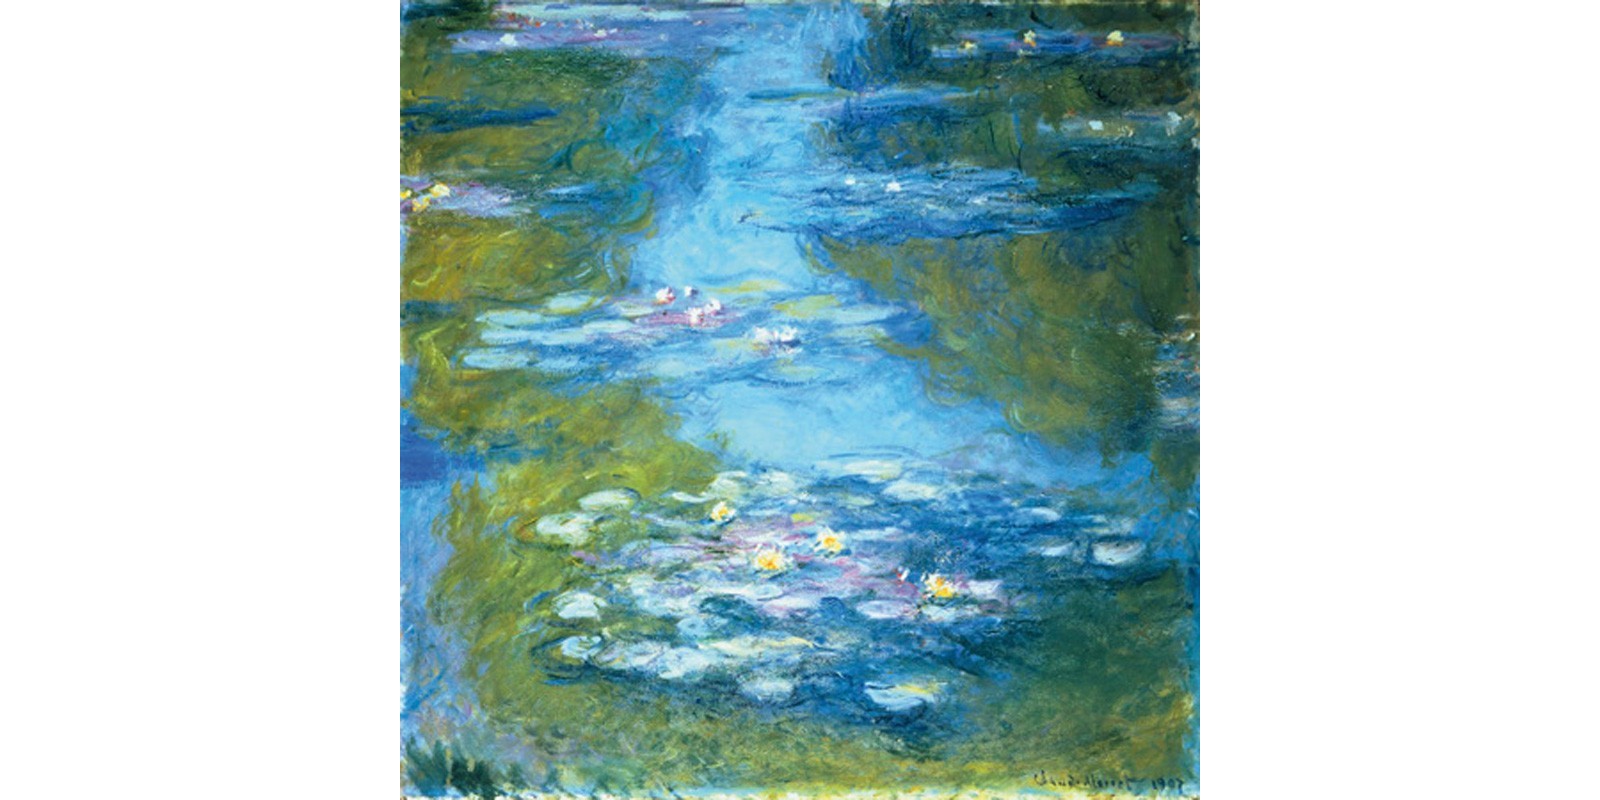 Claude Monet - Nympheas